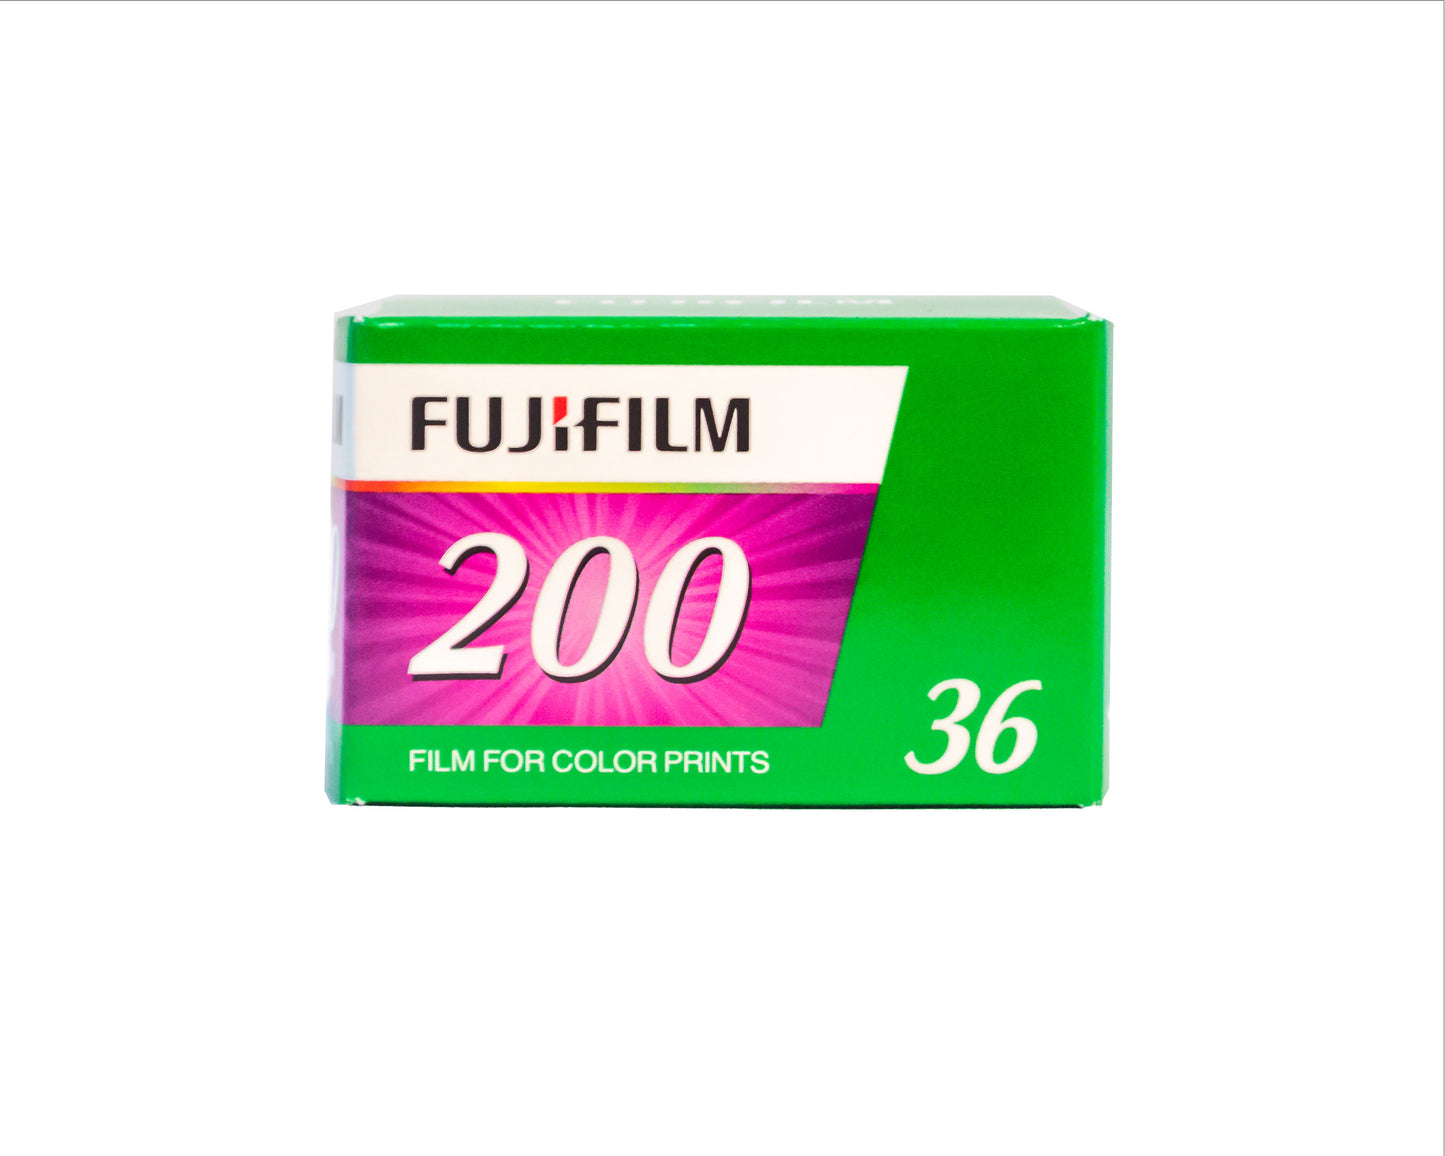 Película fotográfica a color Fujifilm ISO 200 35 MM 36 EXP